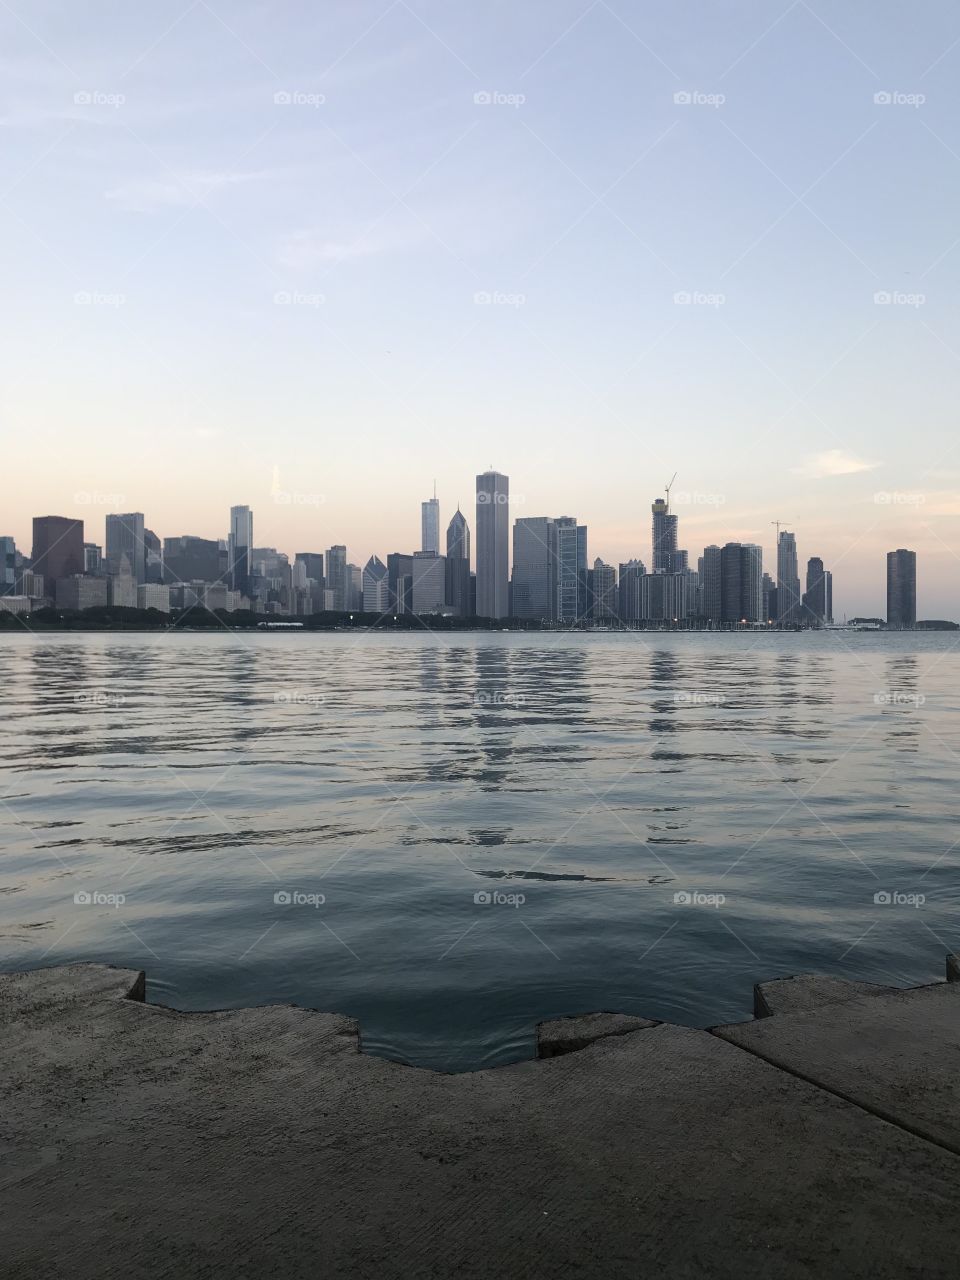 Chicago Lake Michigan 